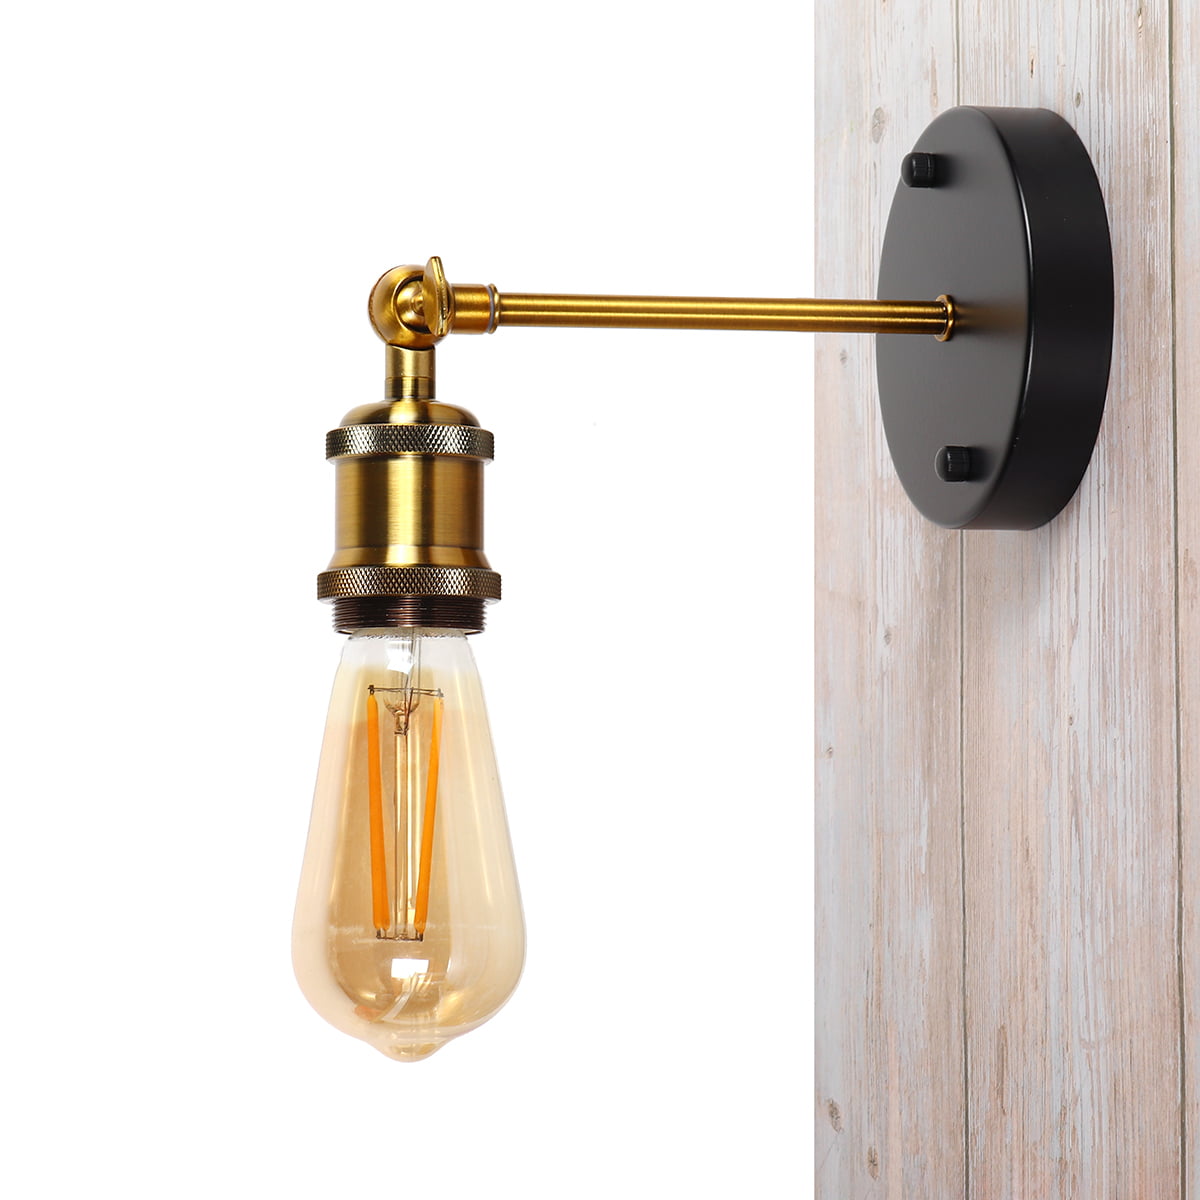 Loft Industrial Retro Vintage Sconce Wall Lamp Light Bulb Holder Bedroom Fixture 